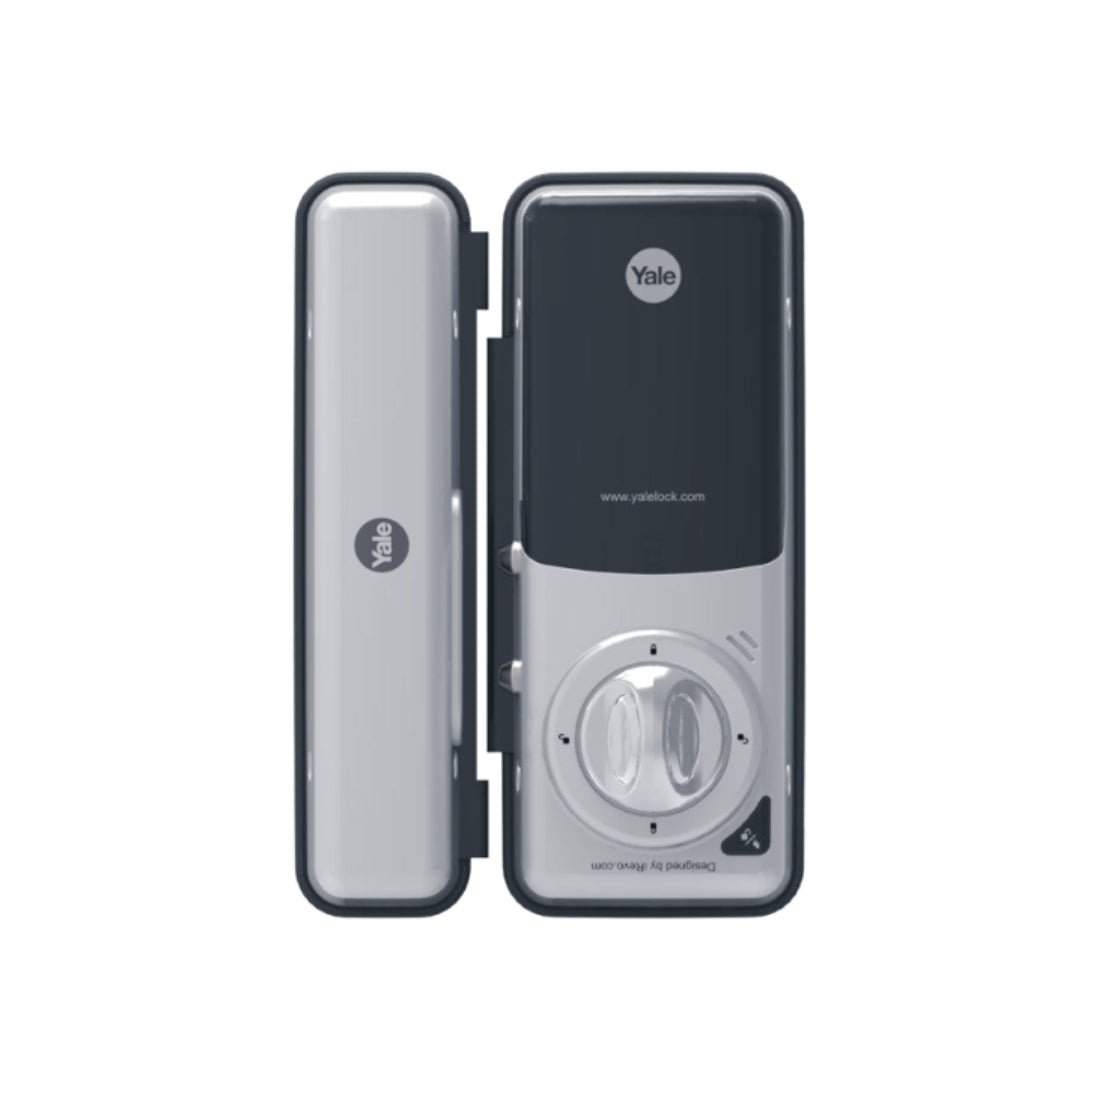 Yale YDG313 Shine Smart Door Lock Bundle - Silver - قفل ذكي - Store 974 | ستور ٩٧٤